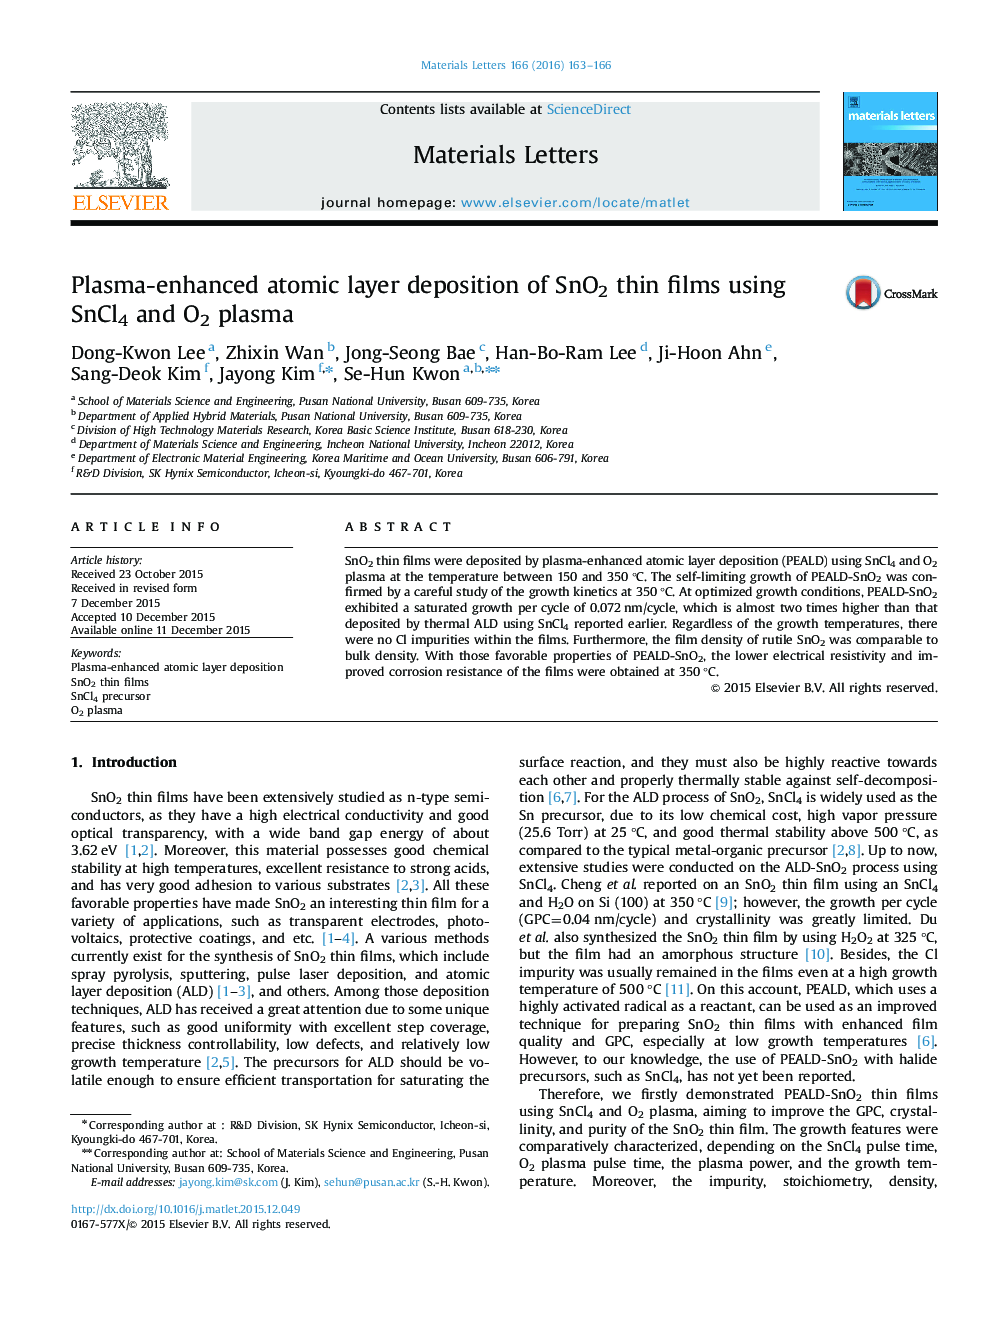 Plasma-enhanced atomic layer deposition of SnO2 thin films using SnCl4 and O2 plasma